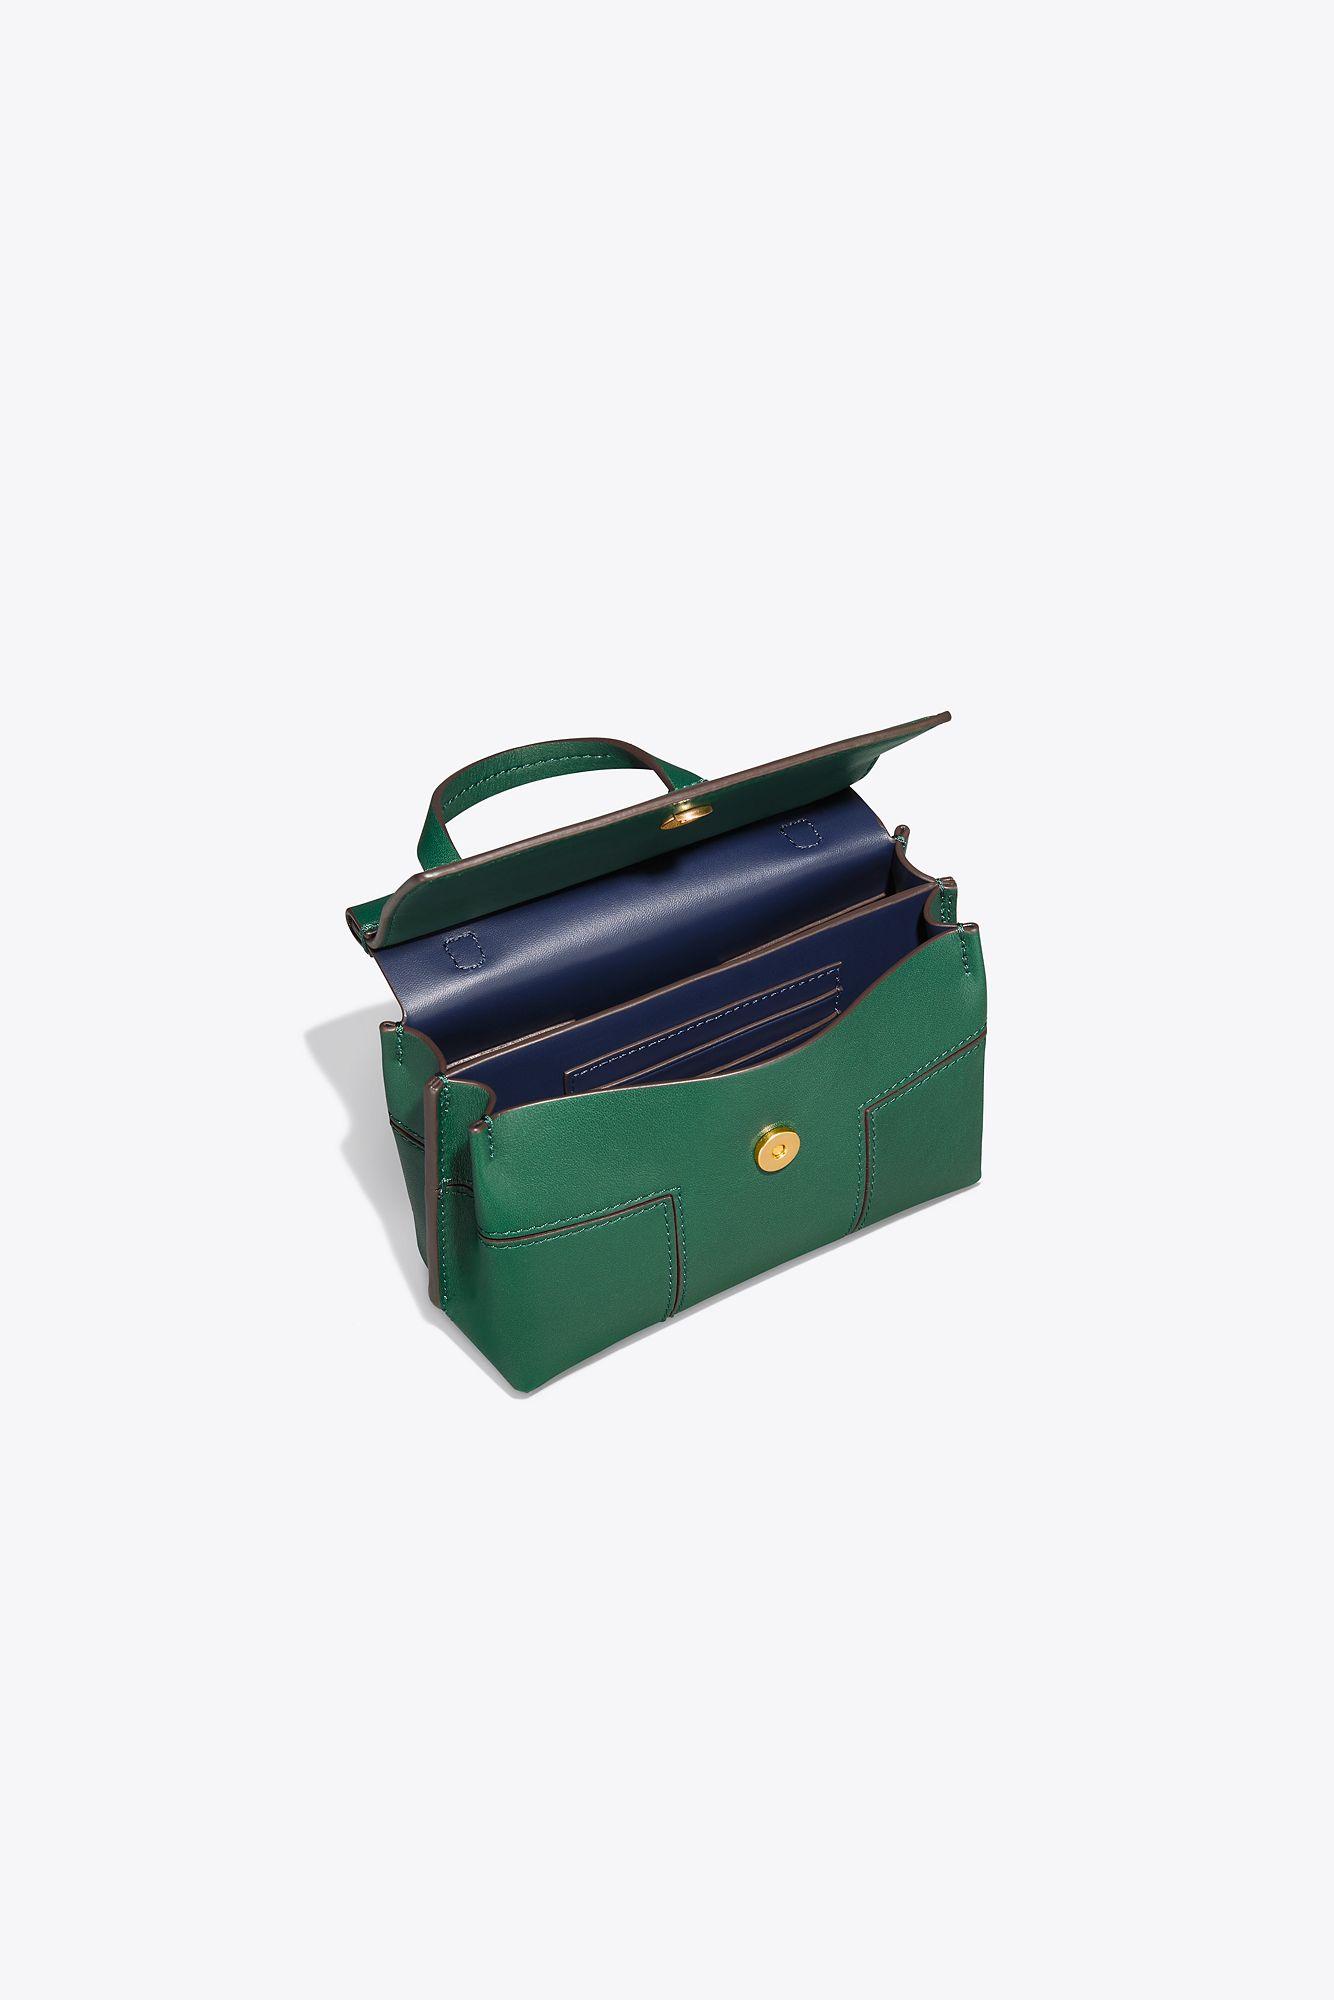 Tory Burch Thea Mini Satchel - Brown Mini Bags, Handbags - WTO53731